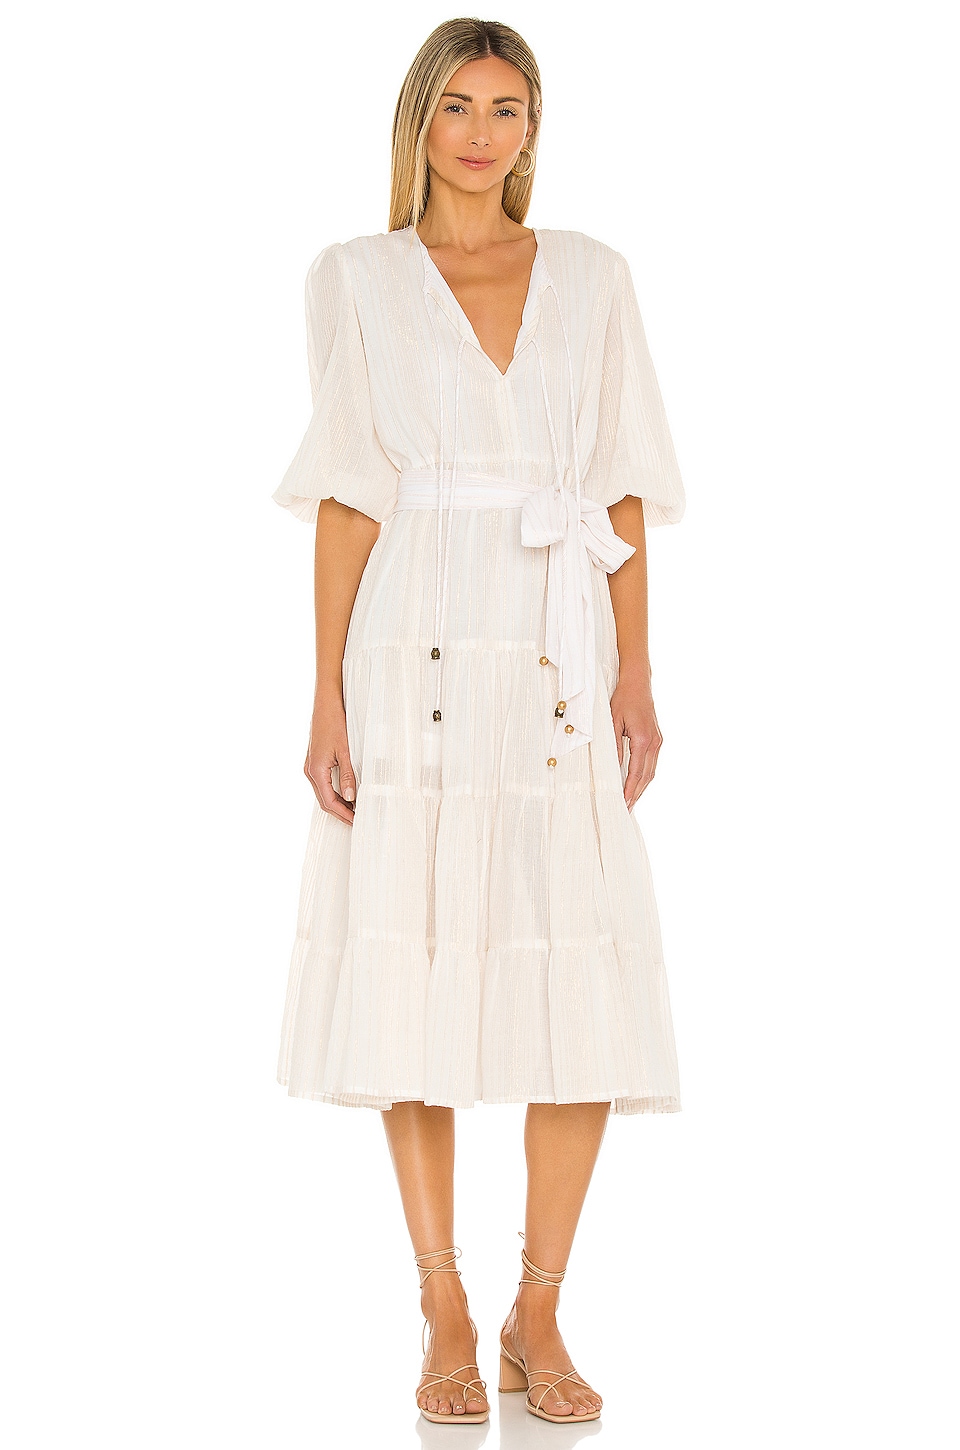 Karina Grimaldi X REVOLVE Soraya Midi Dress in White | REVOLVE